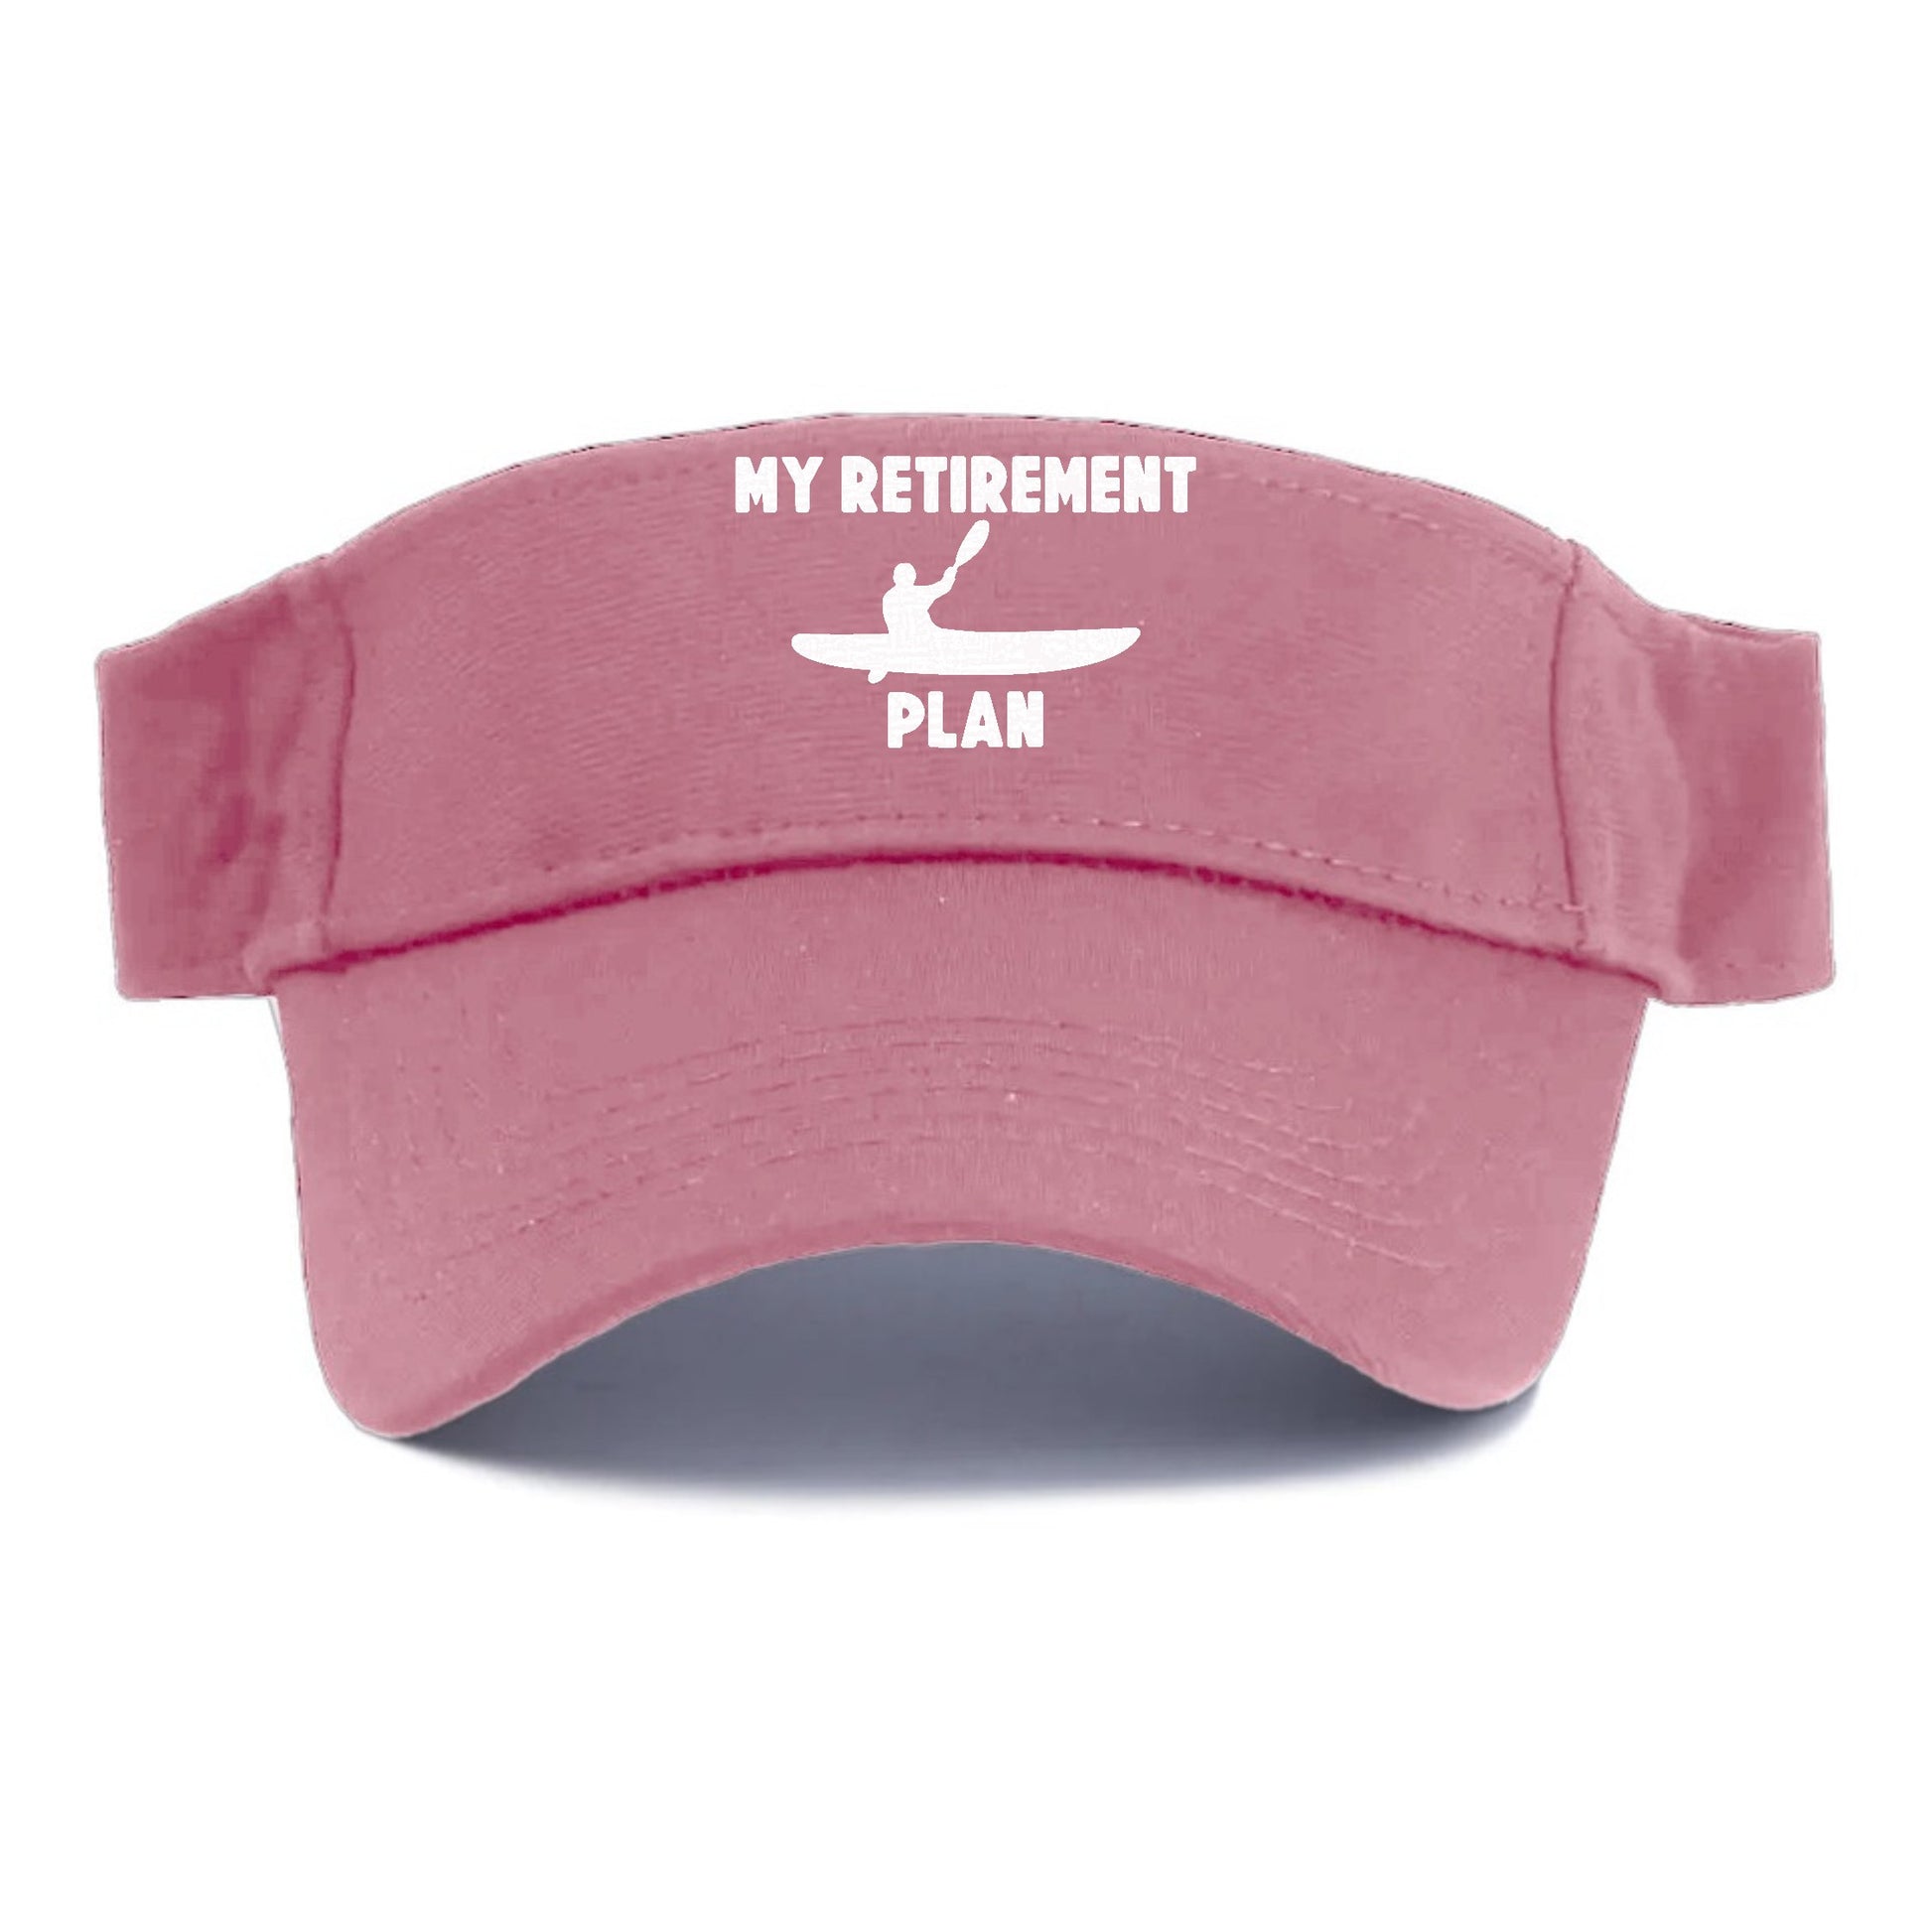 my retirement plan is kayak Hat